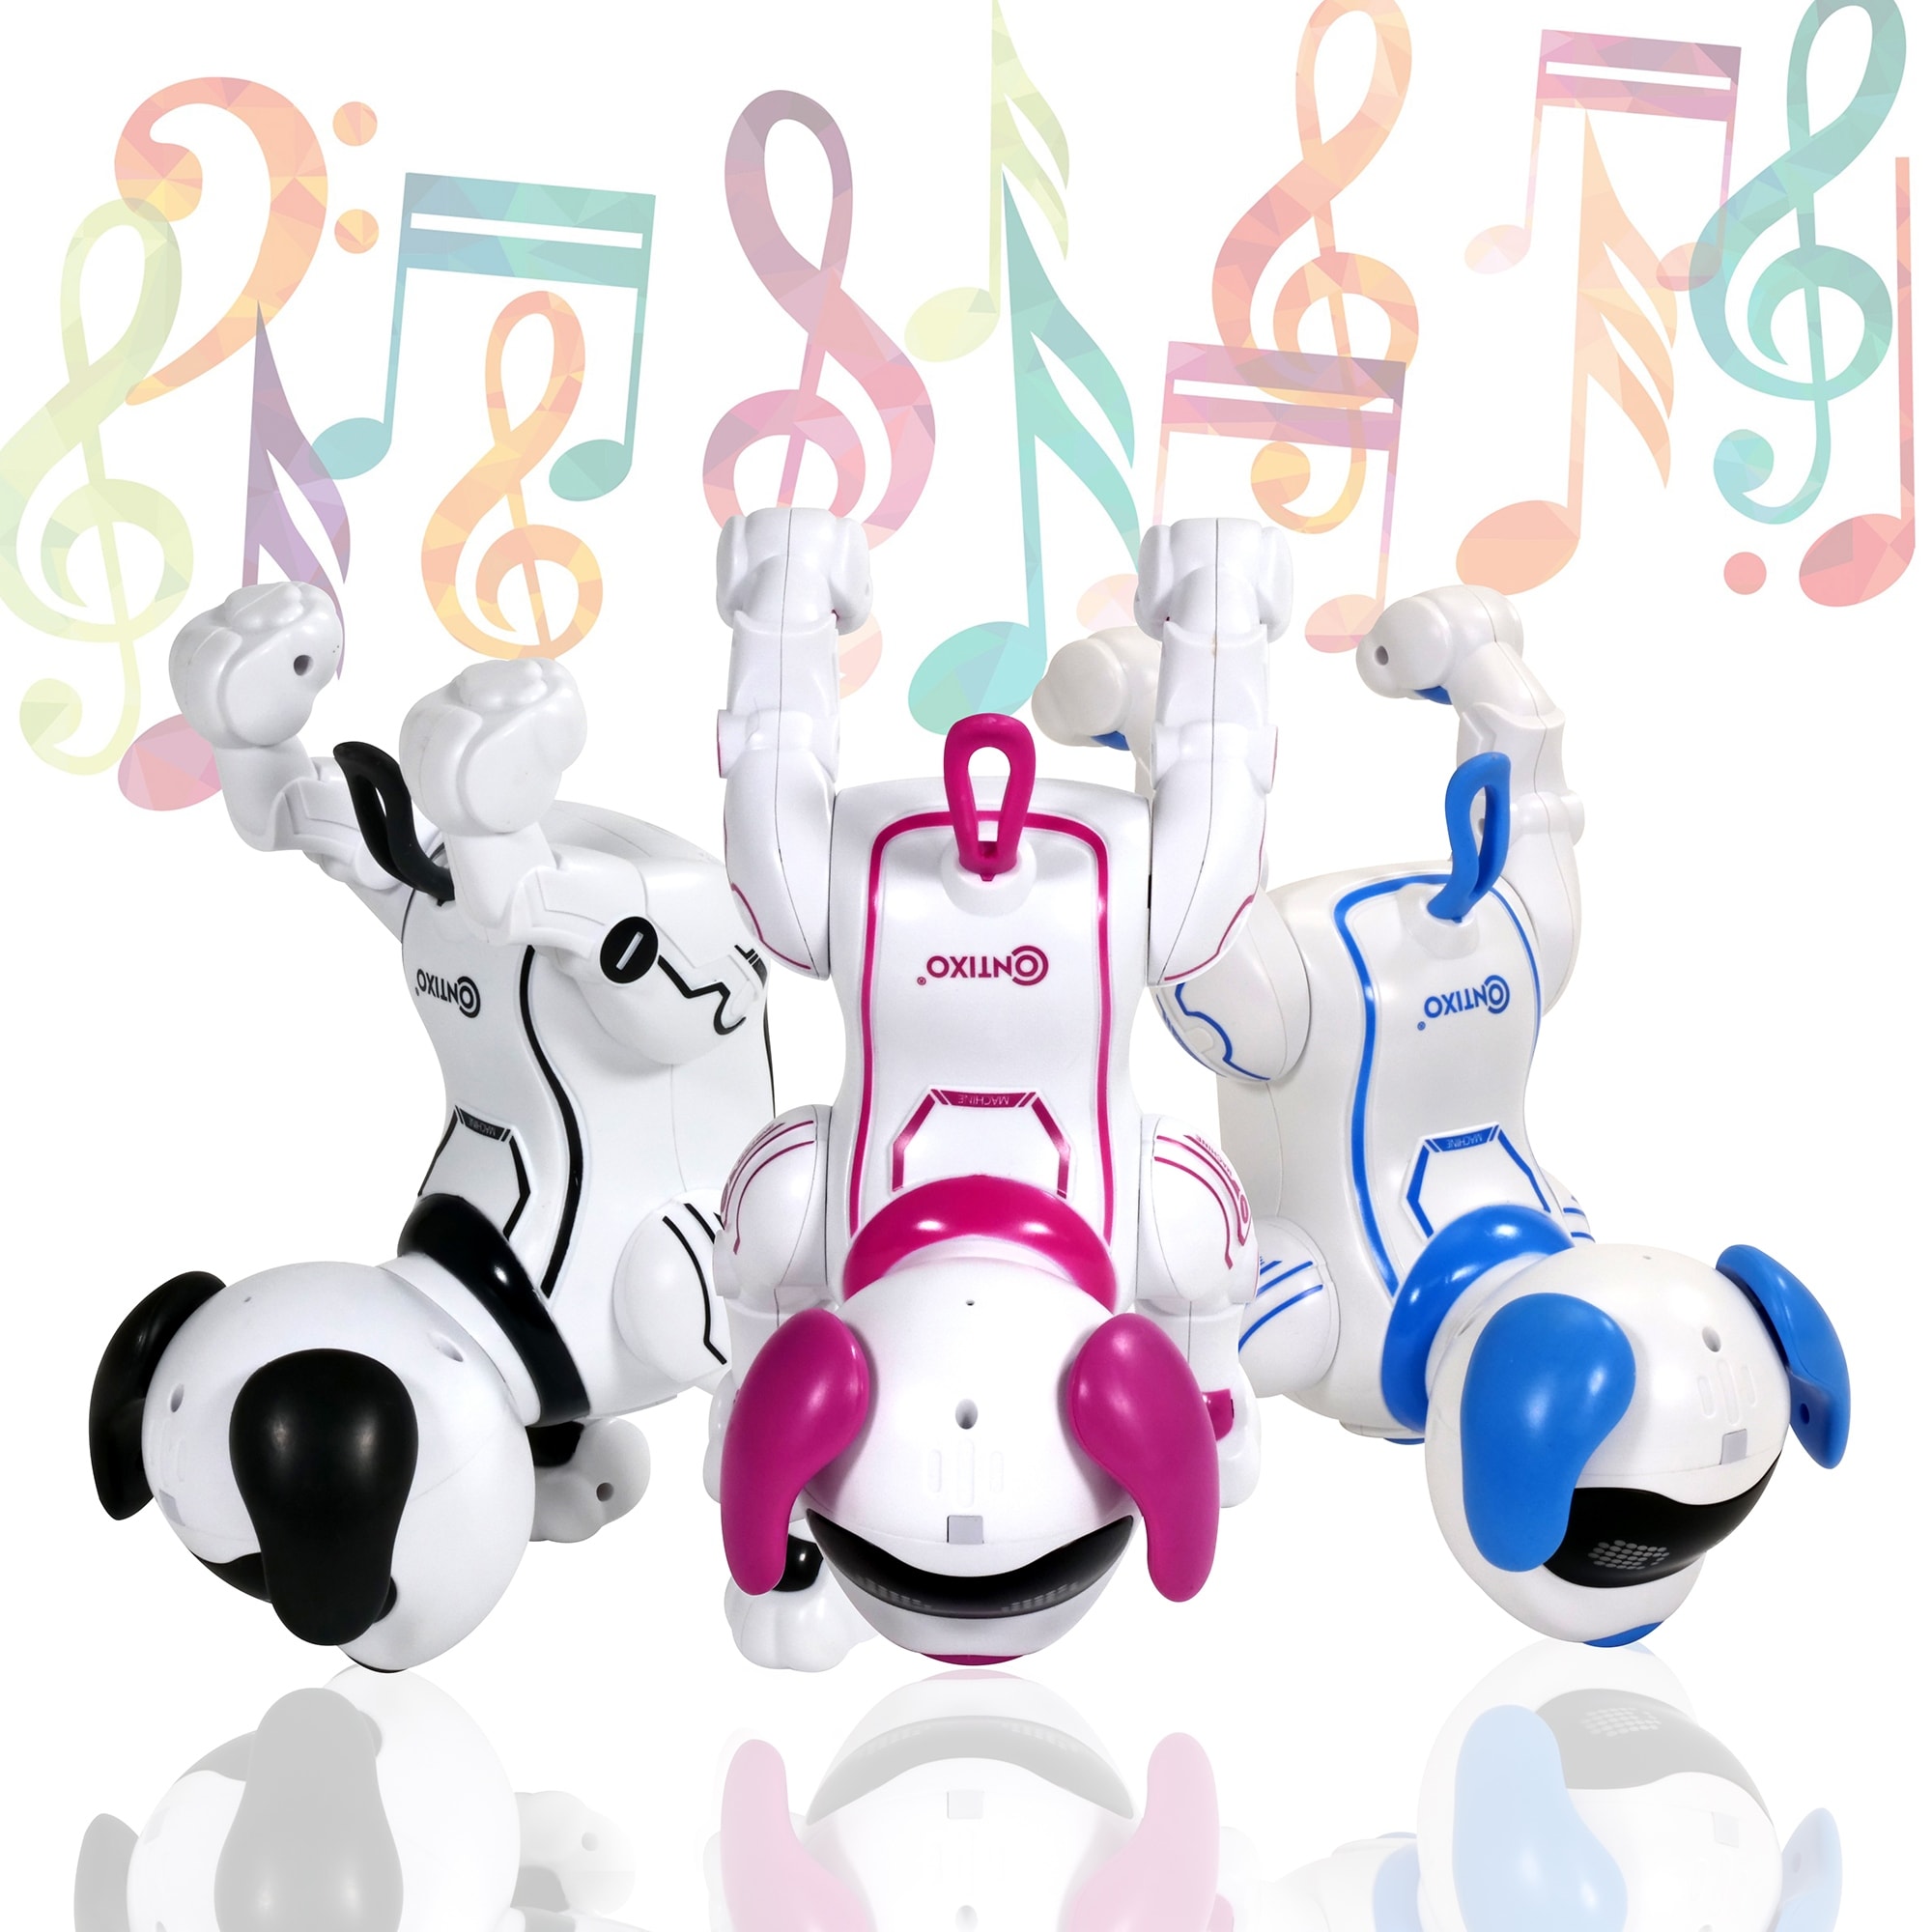 https://ak1.ostkcdn.com/images/products/is/images/direct/39bb62ac3390244597145988c614221192dc43fa/Contixo-R3-Robot-Dog%2C-Walking-Pet-Robot-Toy-Robots-for-Kids%2C-Remote-Control%2C-Interactive-Dance%2C-Voice-Command%2C-Boys-Girls-%28Blue%29.jpg